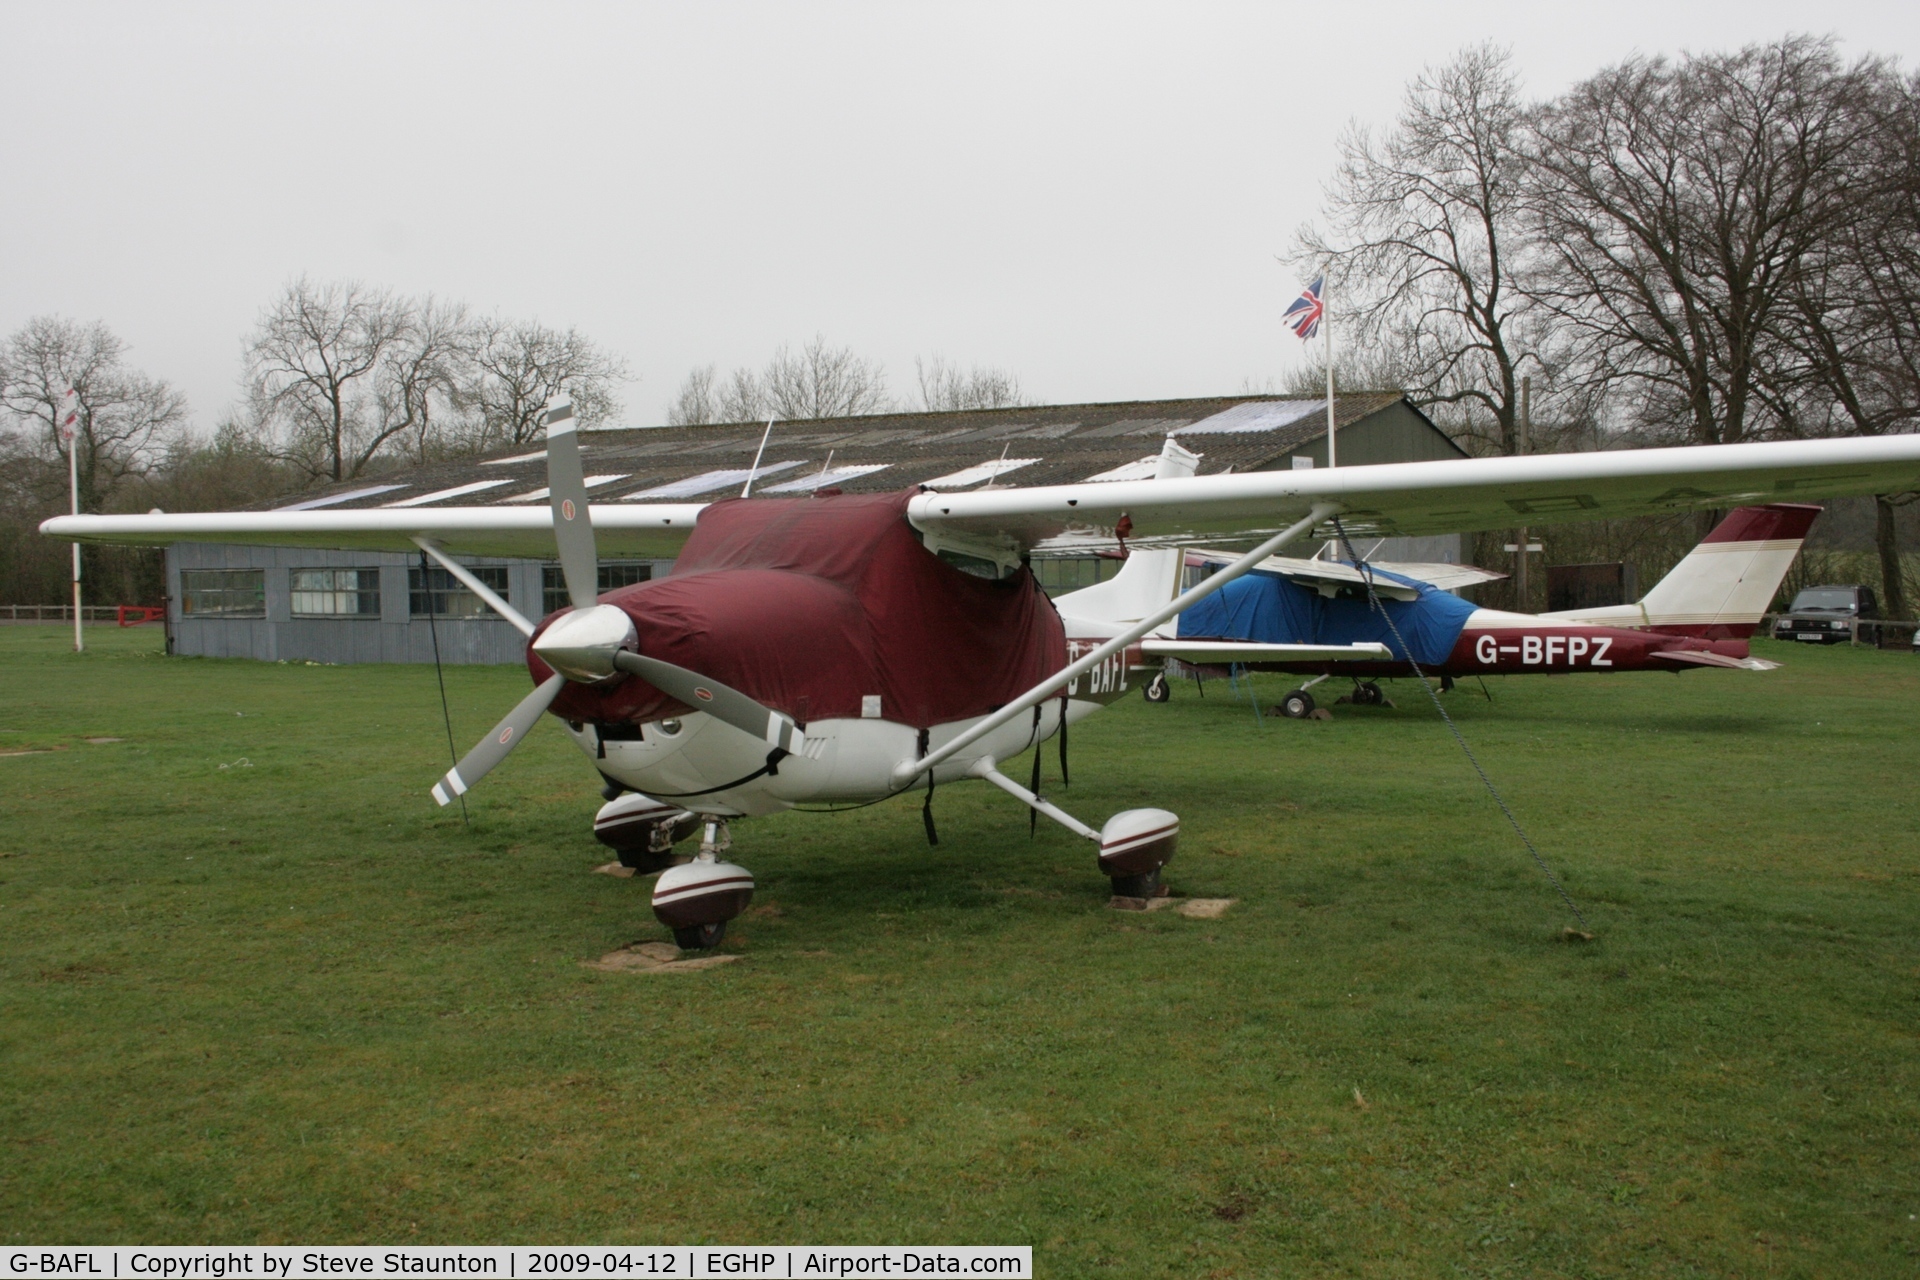 G-BAFL, 1973 Cessna 182P Skylane C/N 182-61469, Taken at Popham Airfield, England on a gloomy April Sunday (12/04/09)